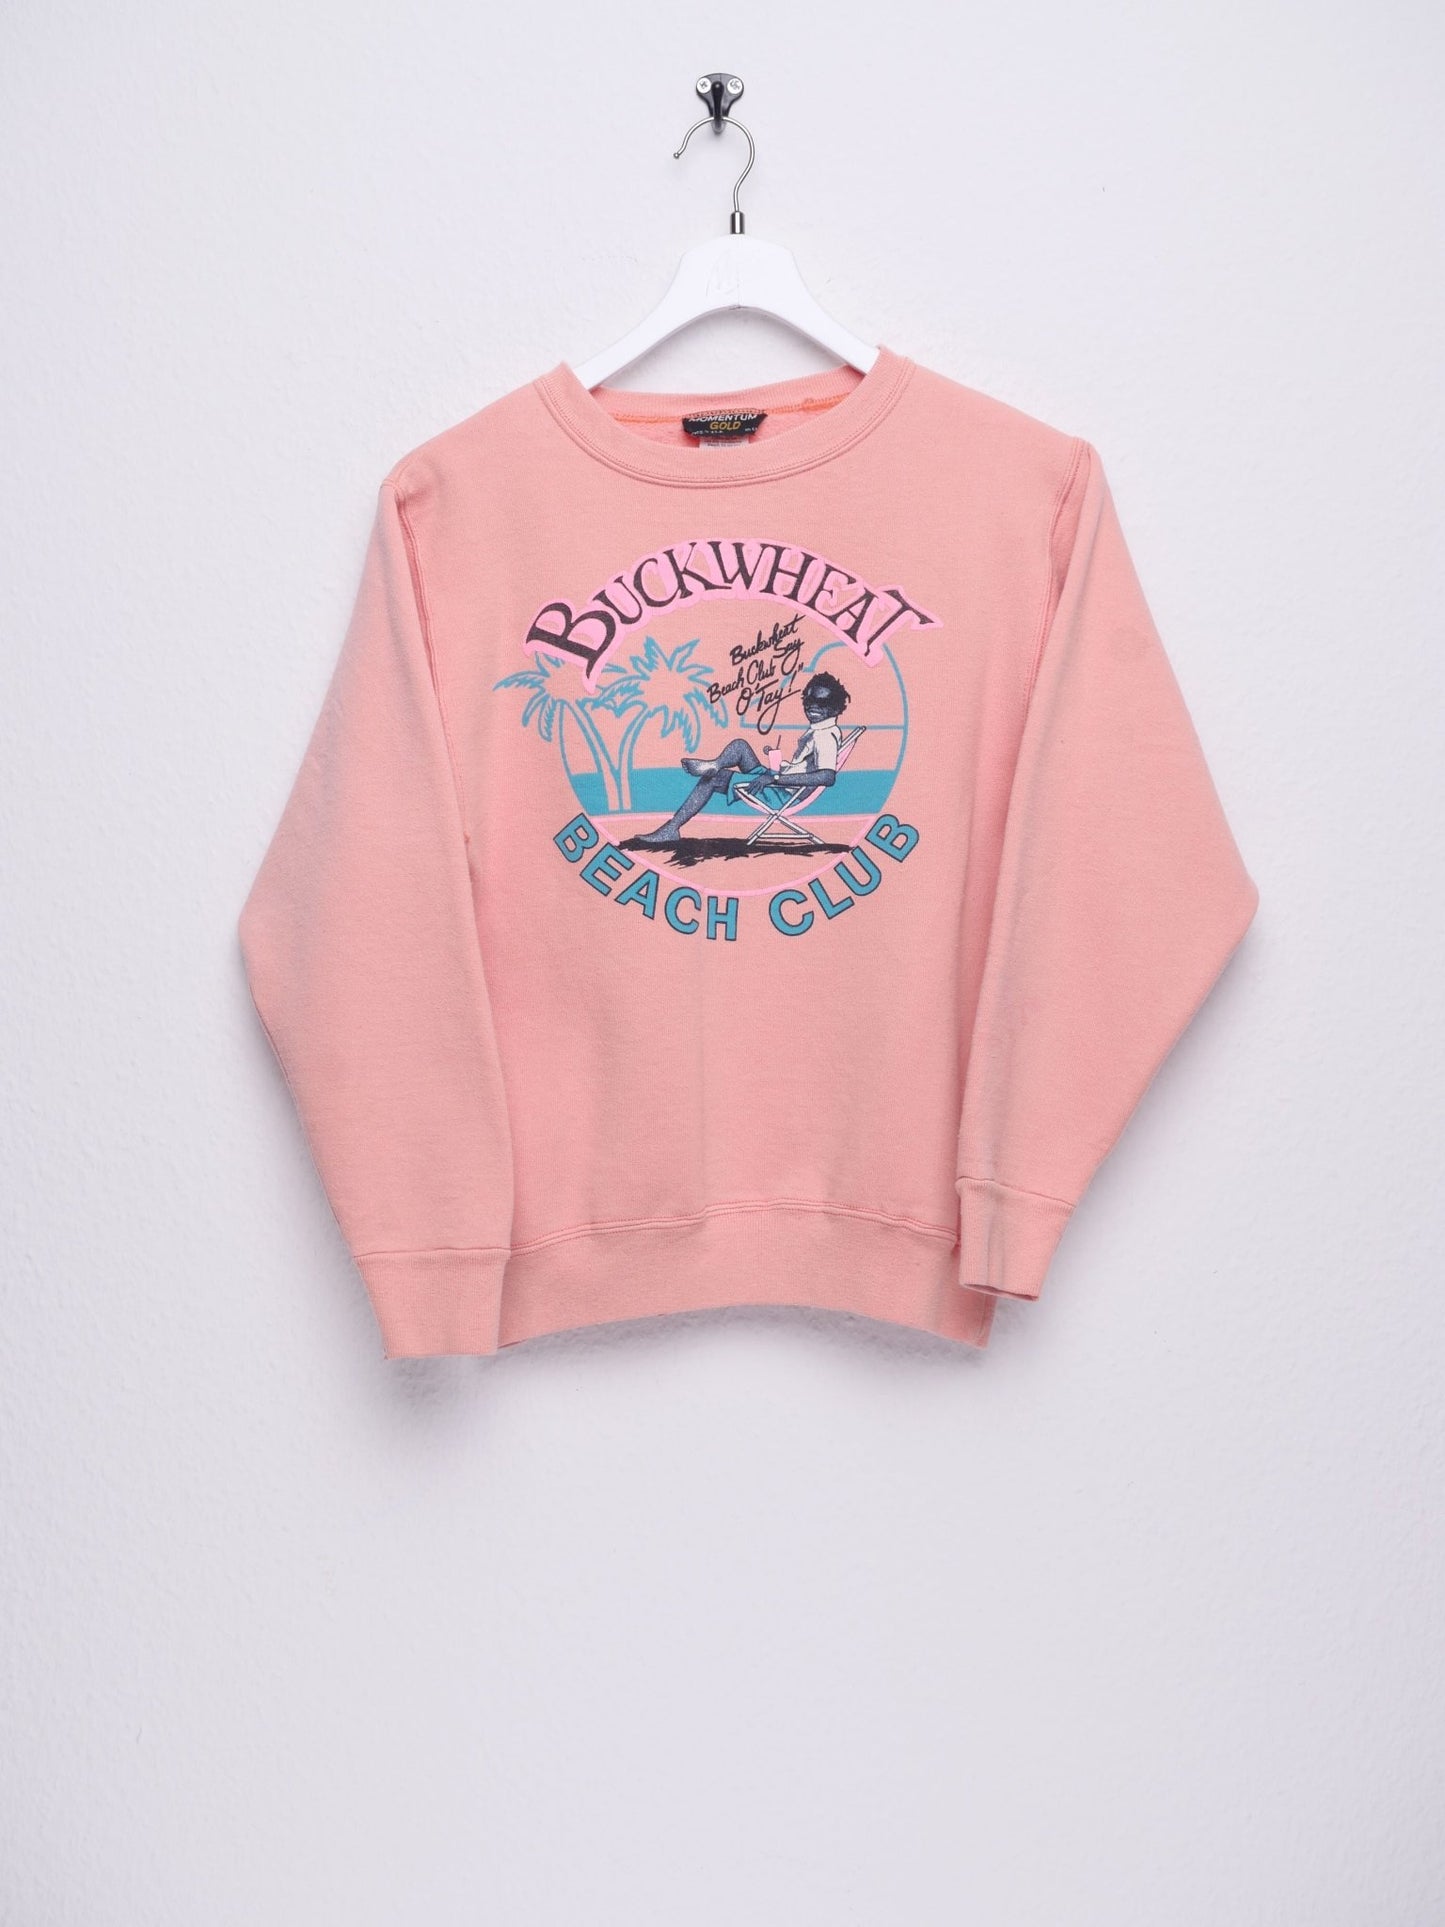 Buckwheat Beach Club printed Logo Vintage Sweater - Peeces